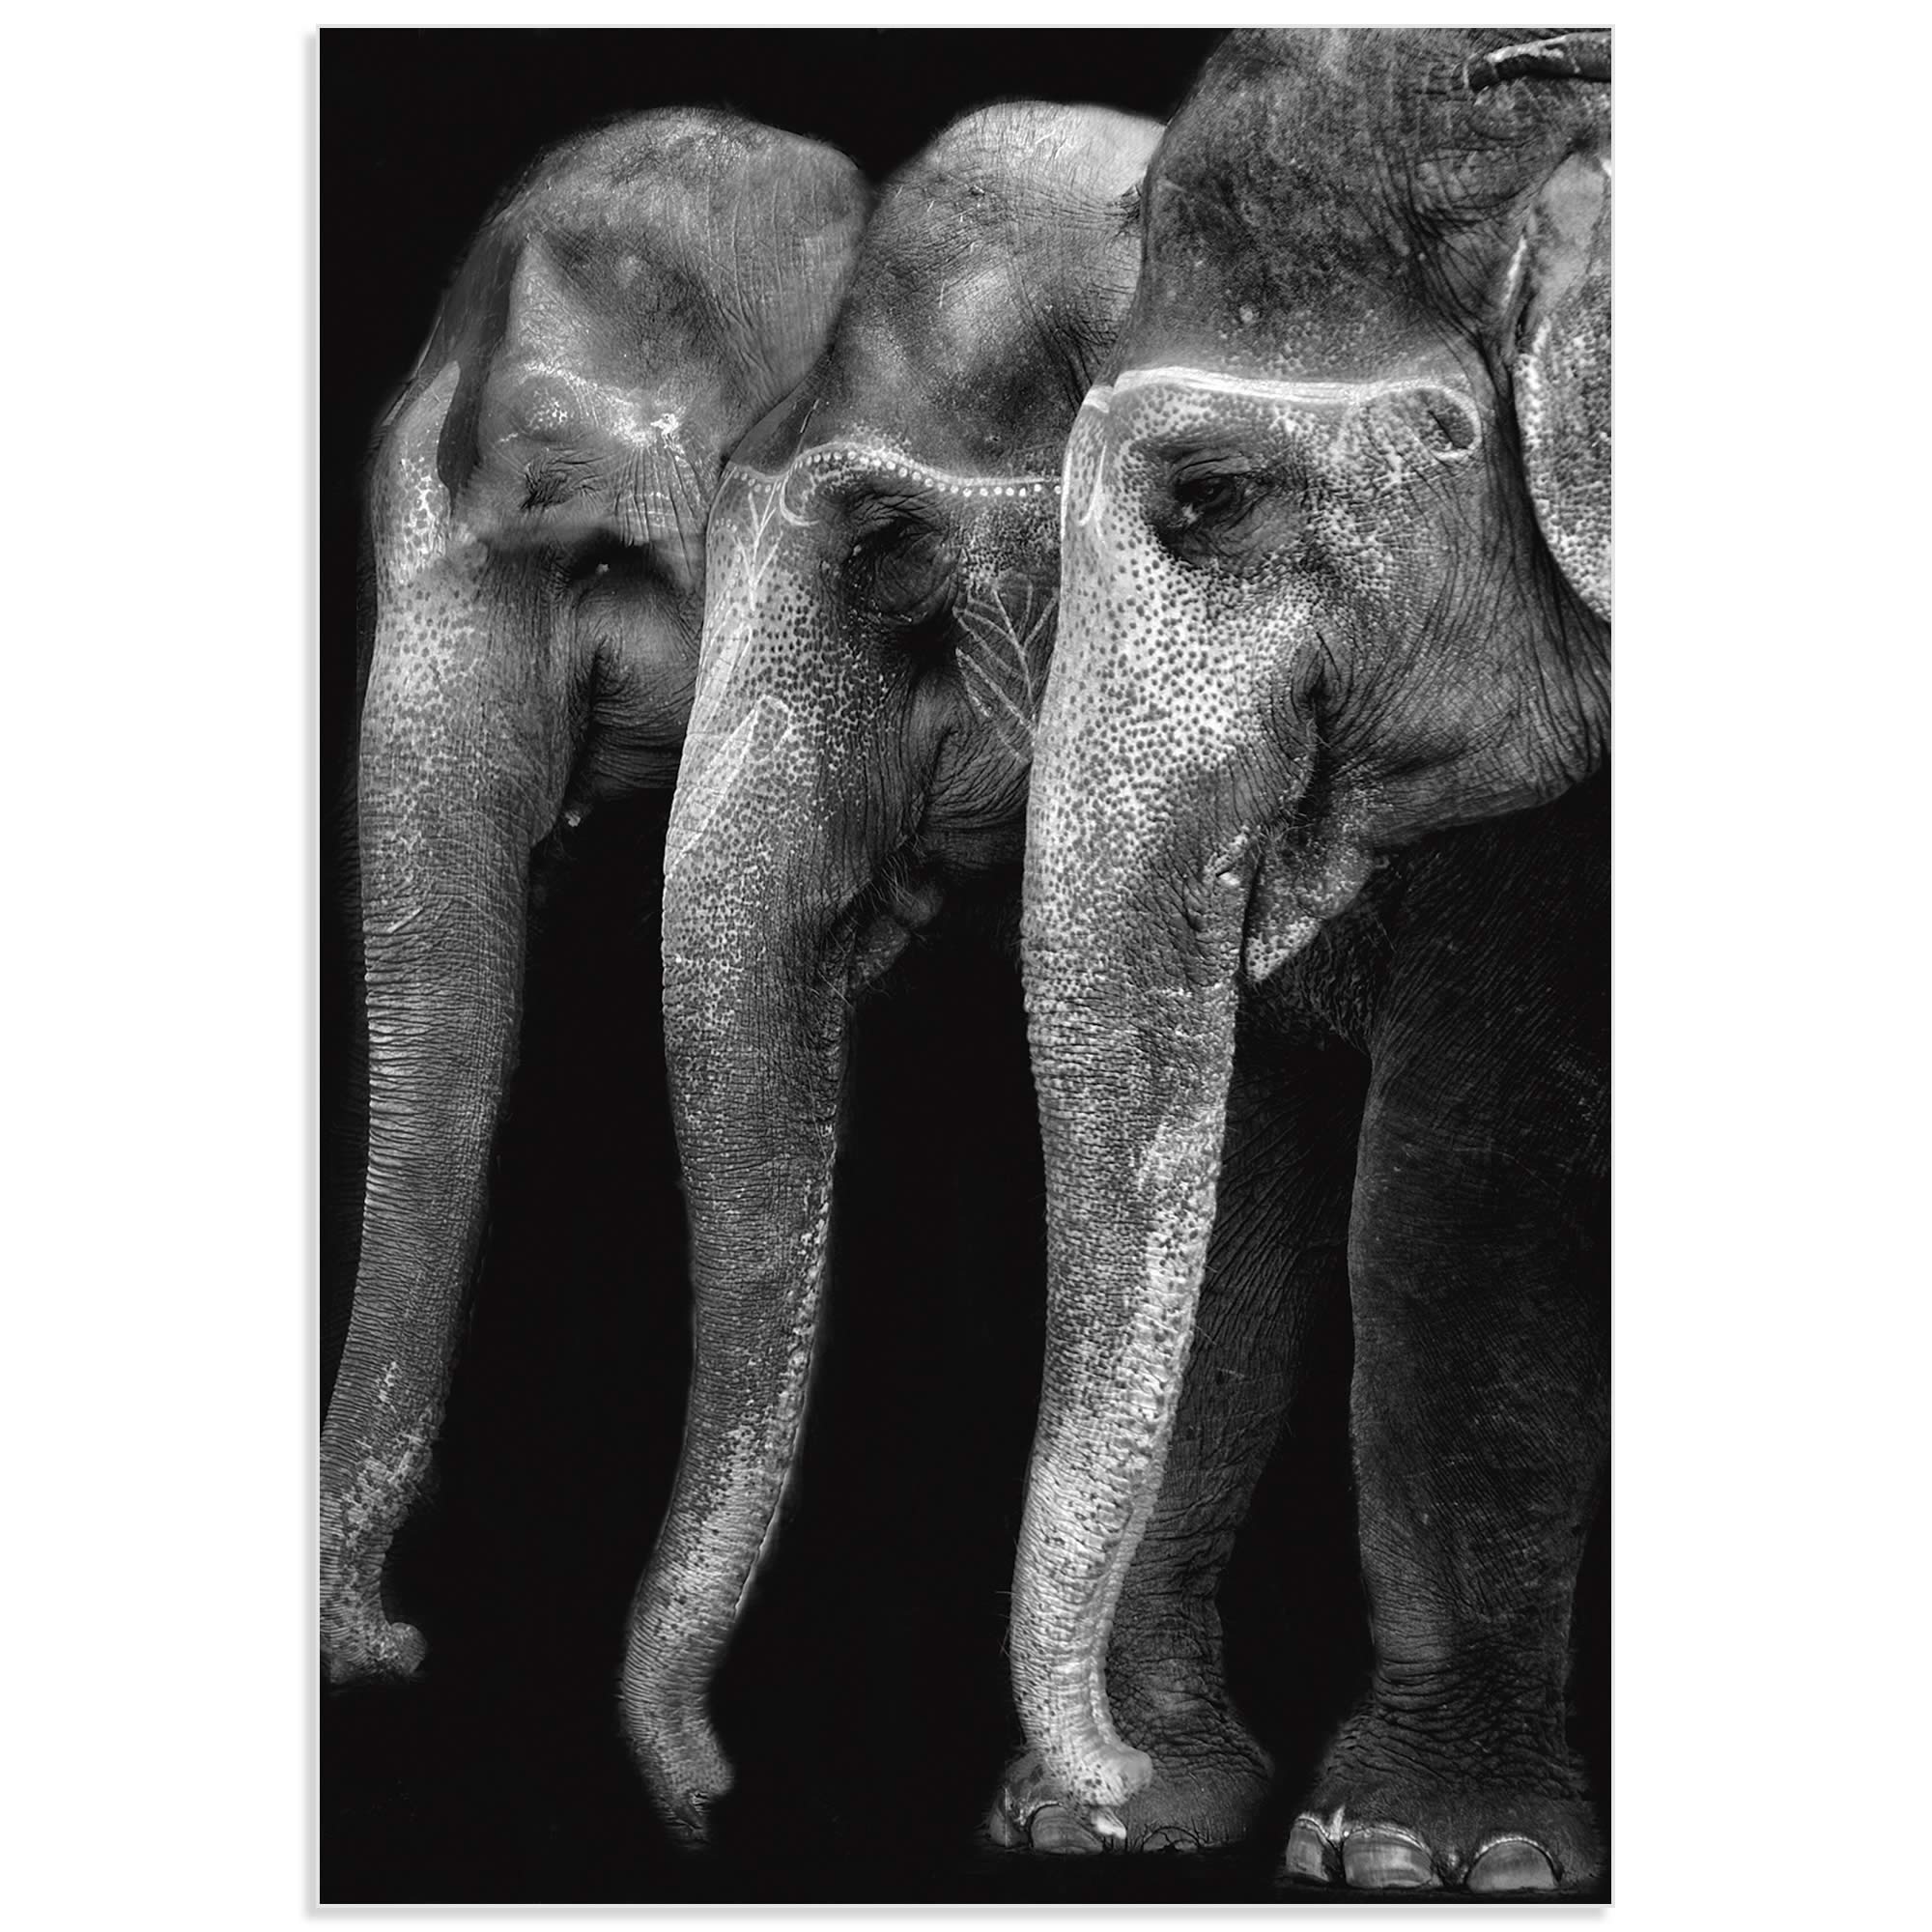 Great Elephants by Yvette Depaepe - Elephant Wall Art on Metal or Acrylic - Alternate View 2